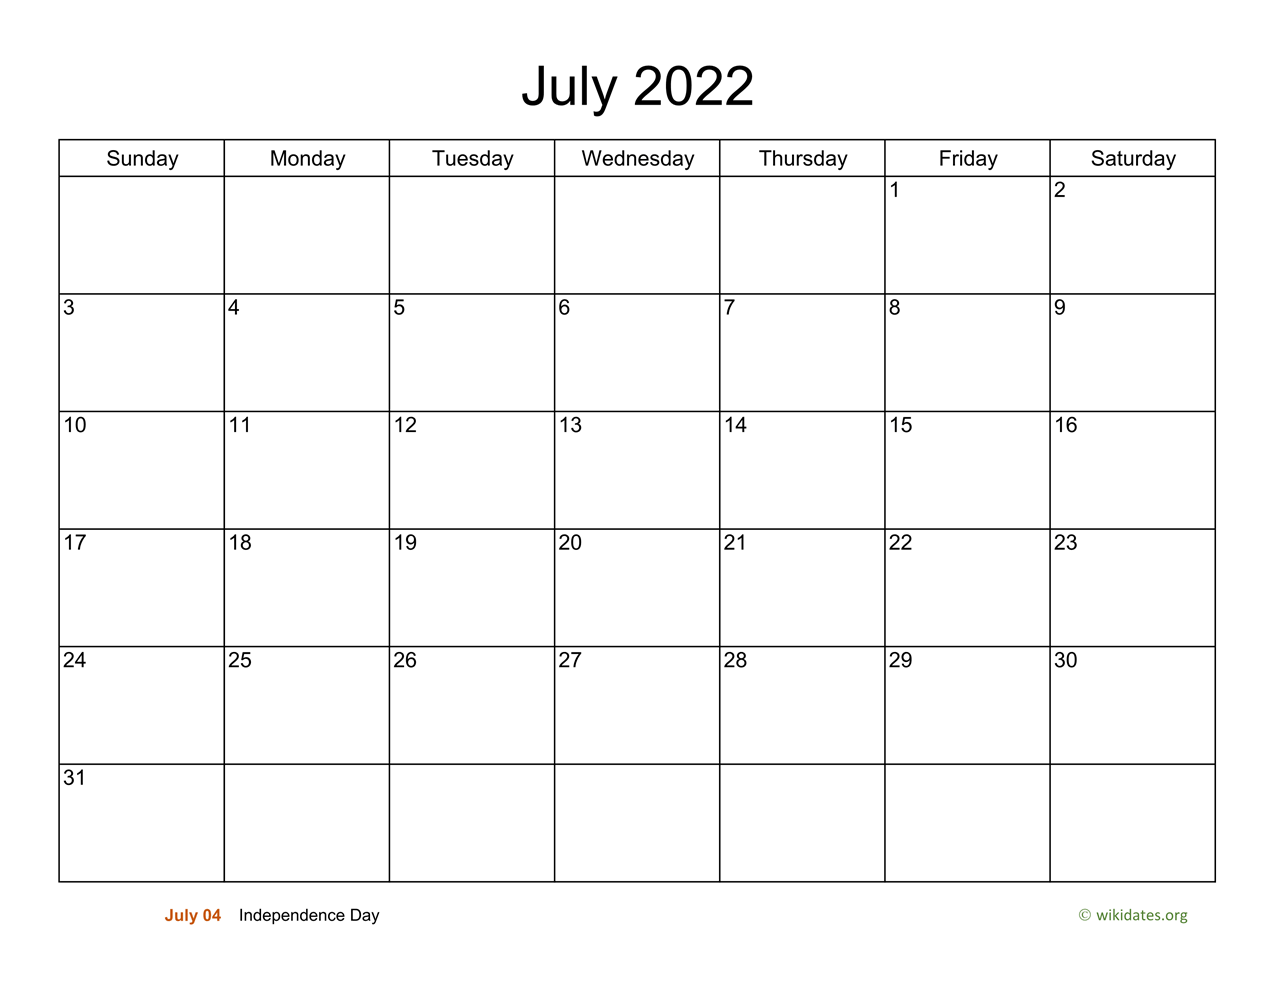 Month Of July Calendar 2022 Basic Calendar For July 2022 | Wikidates.org